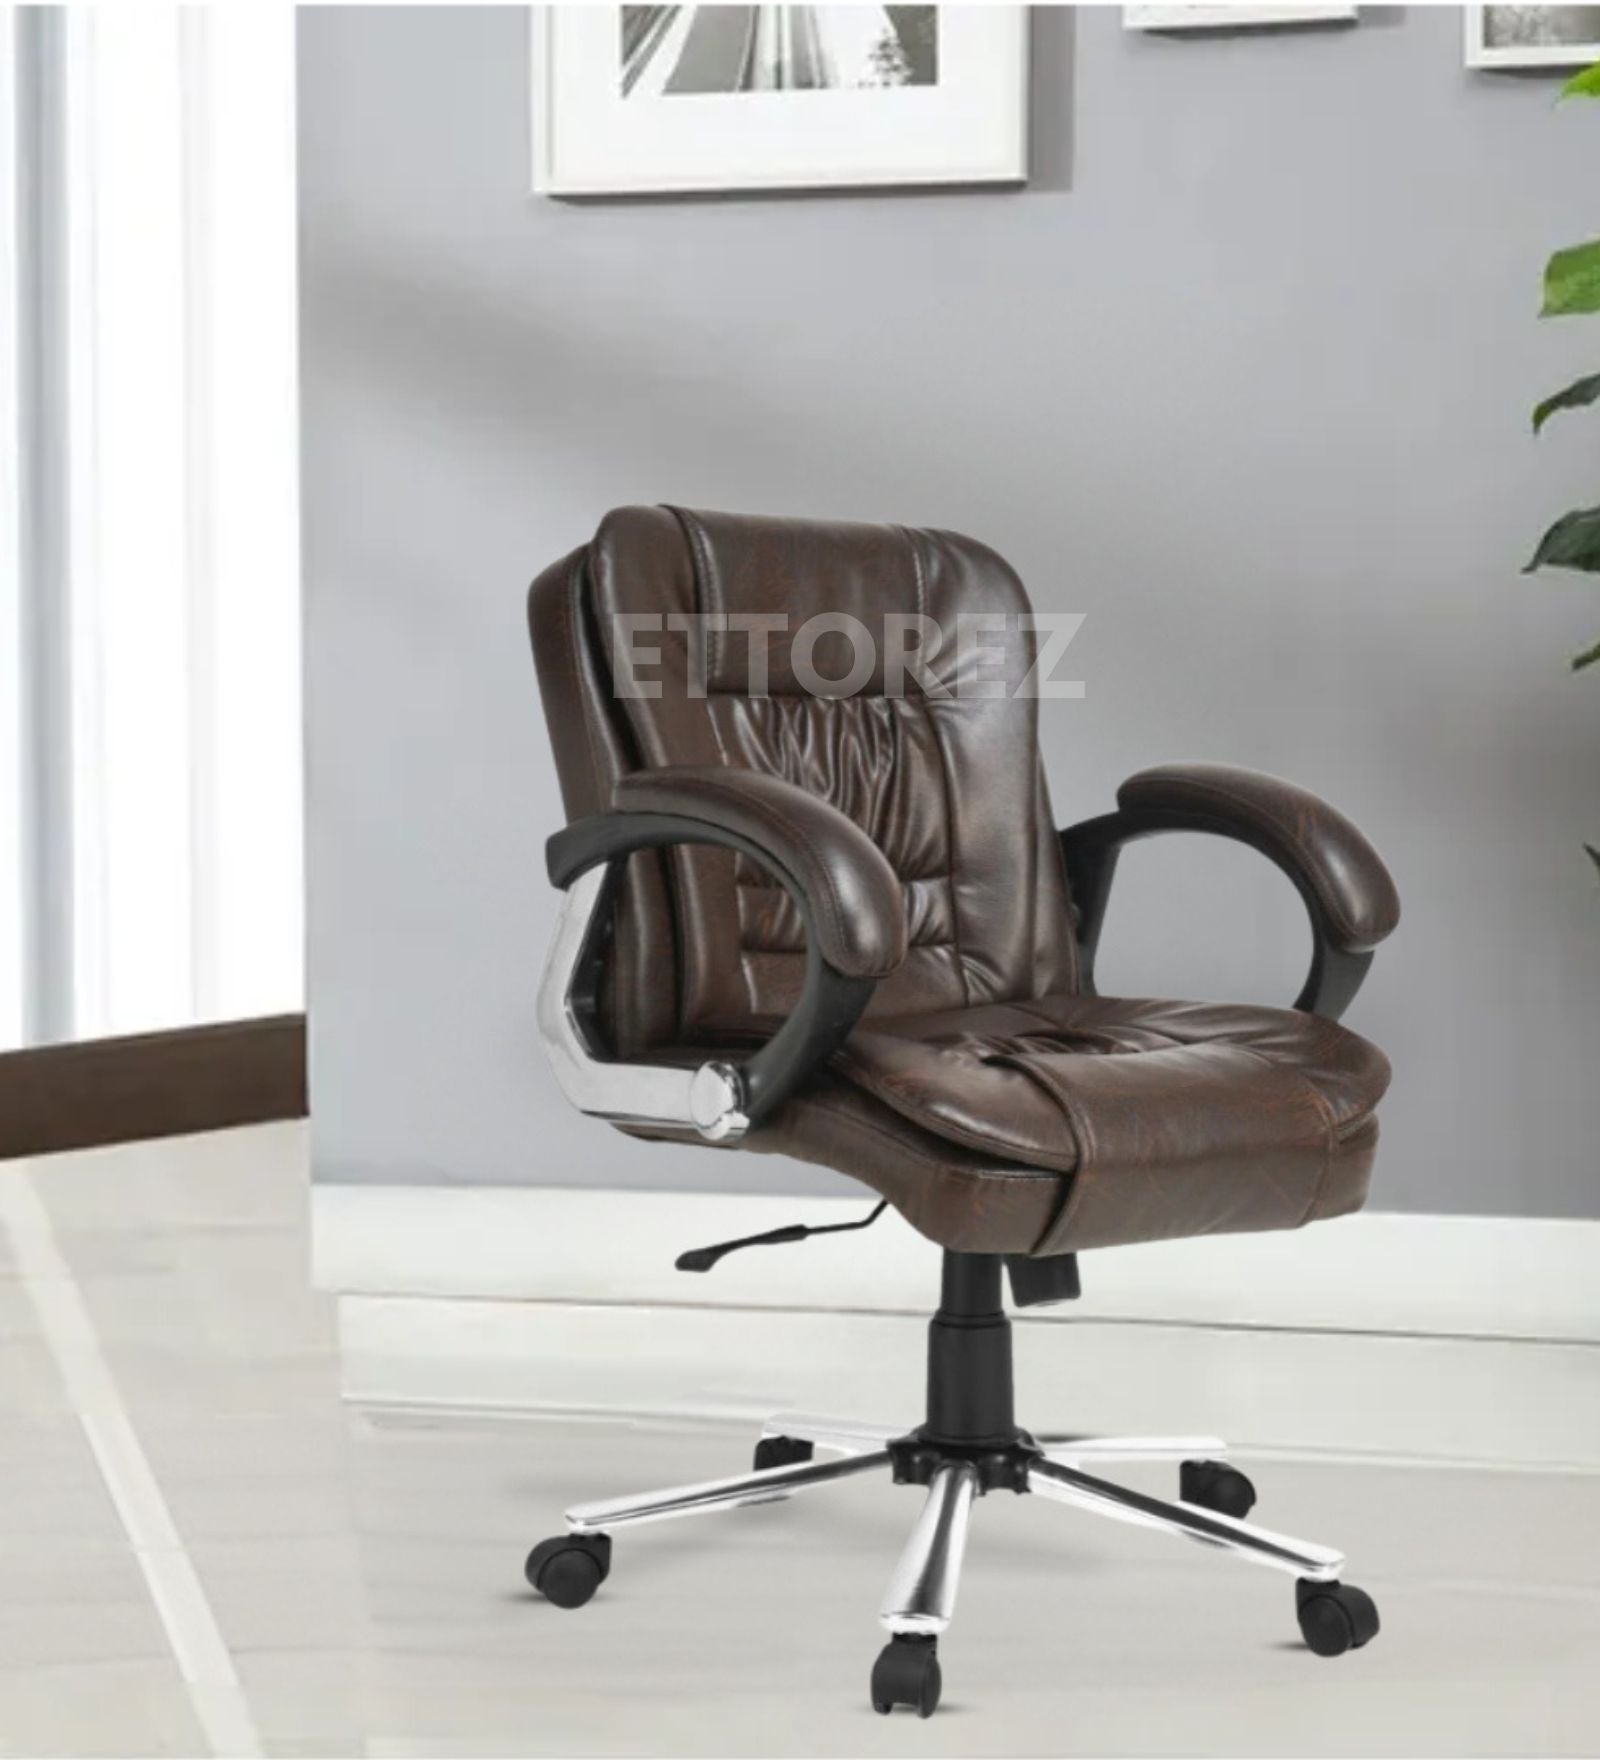 Ettorez MICRA Executive Leatherette Office Chair